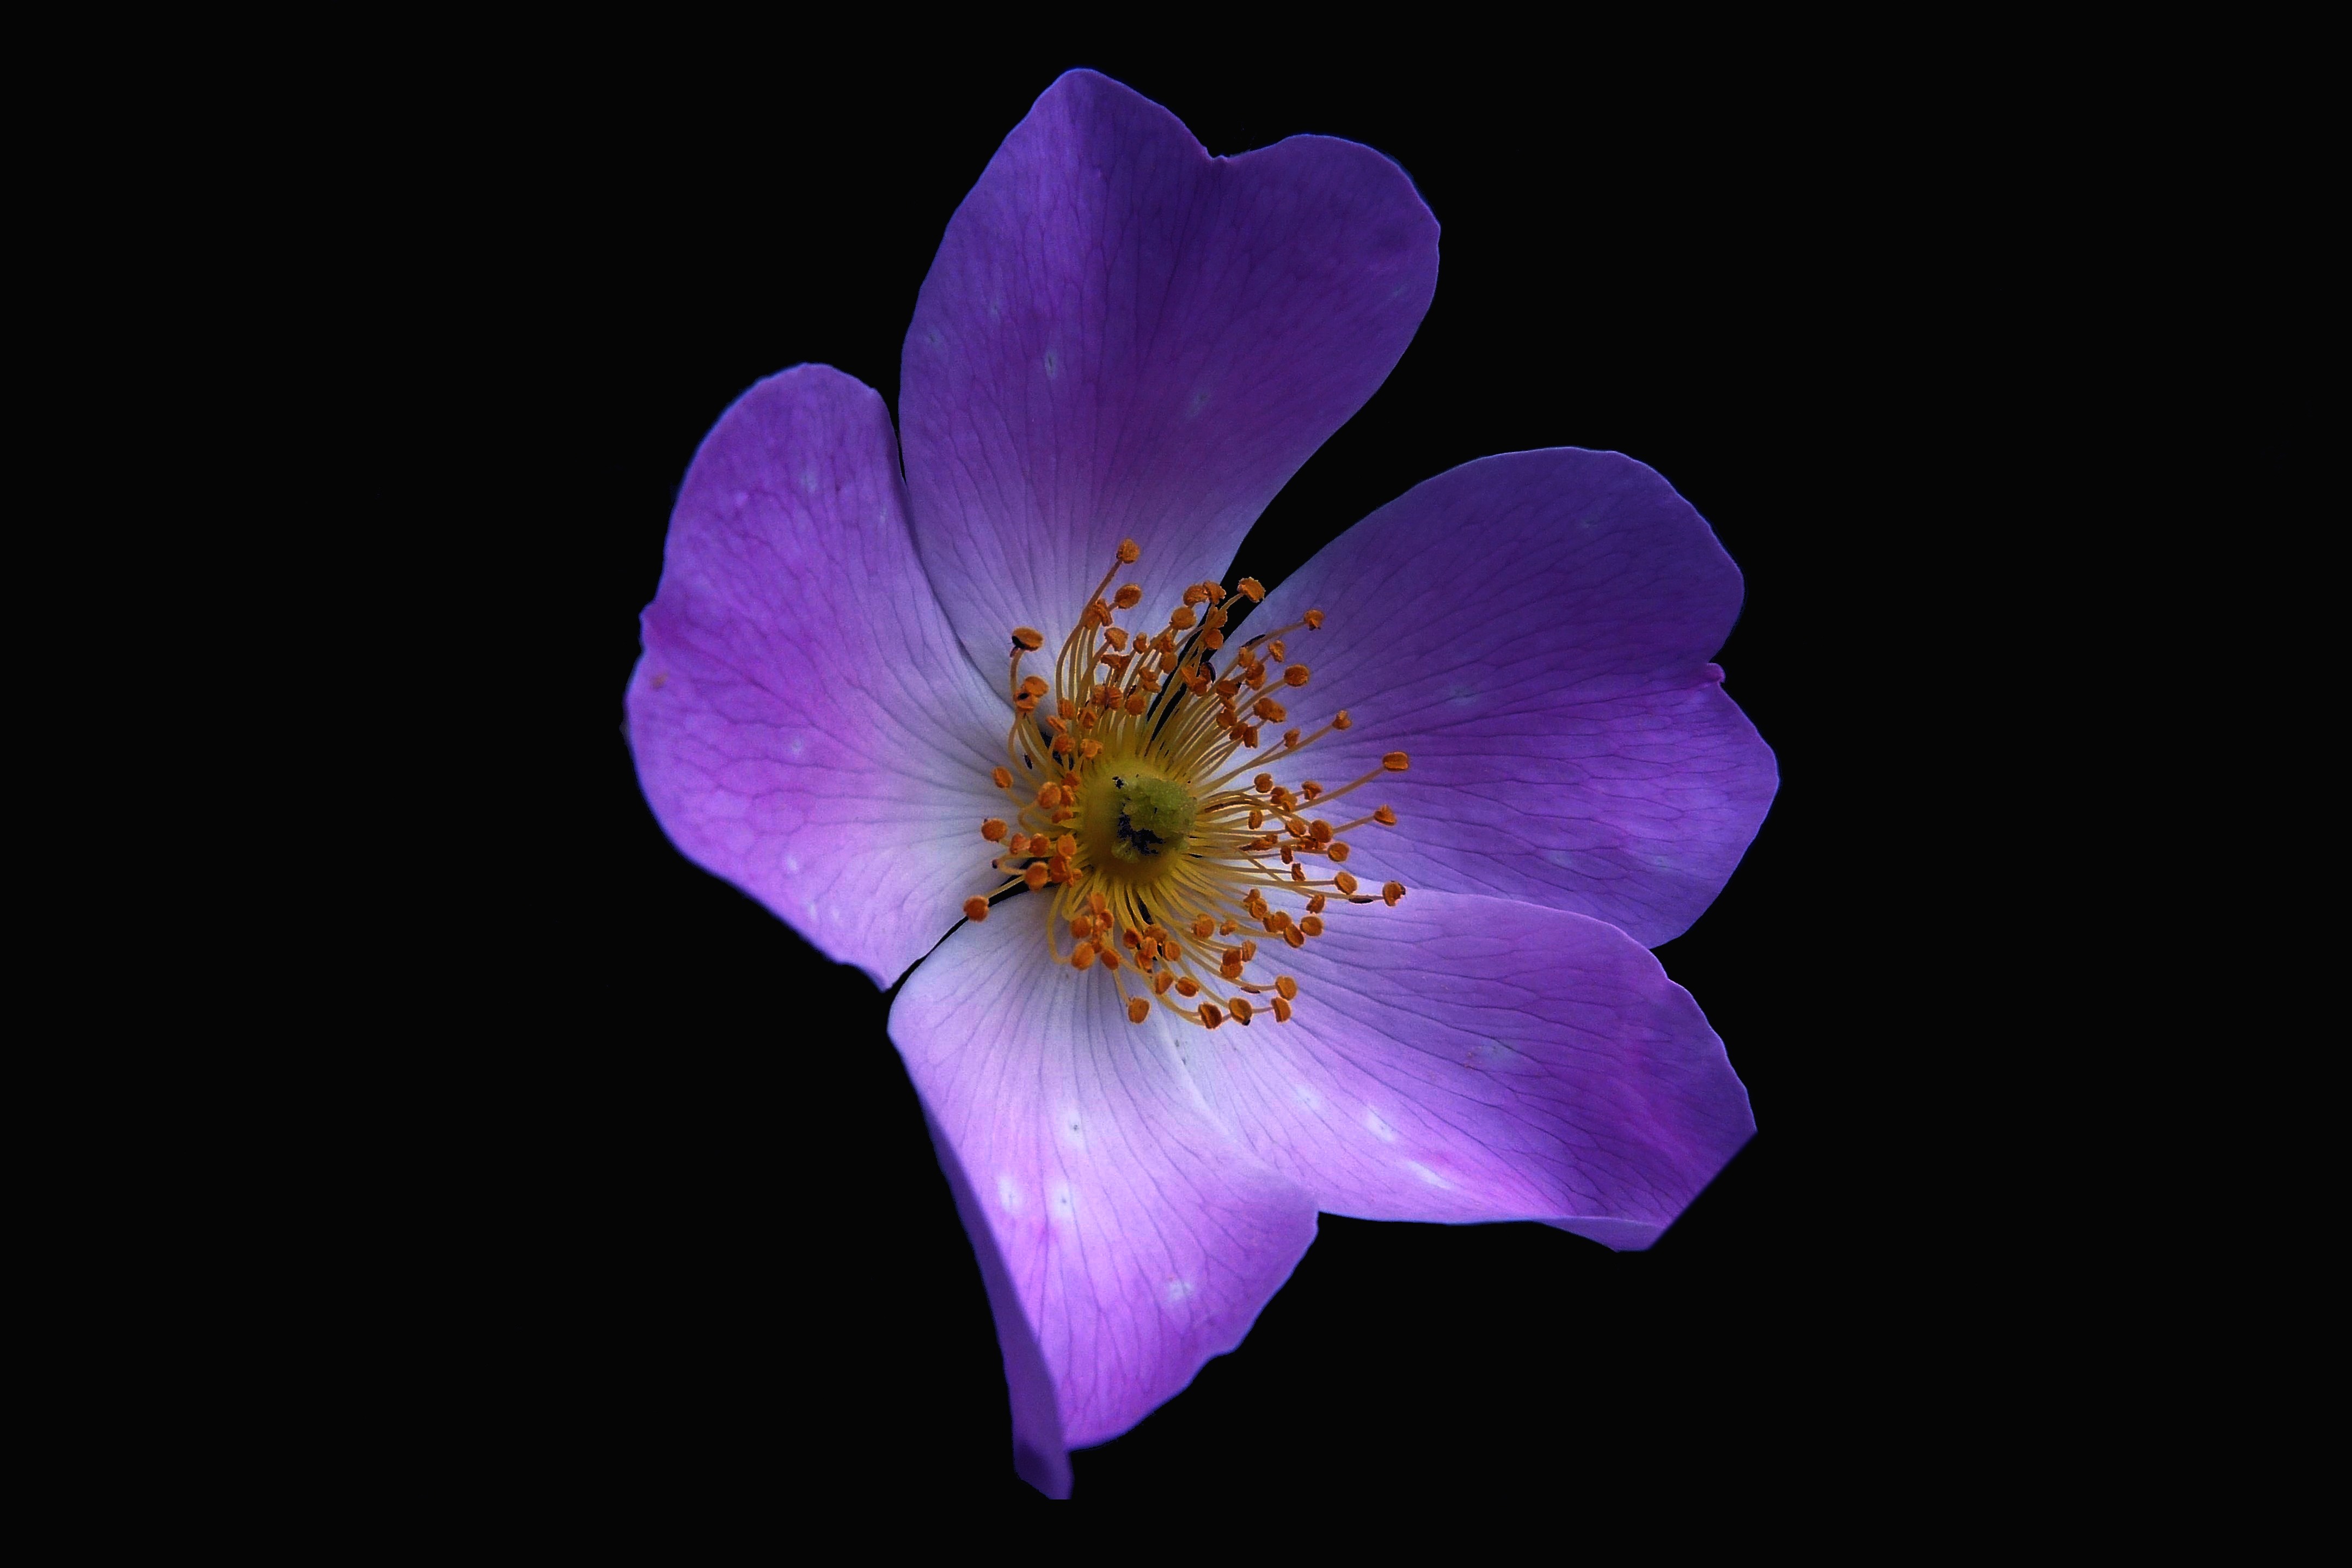 A little flower with purple petals